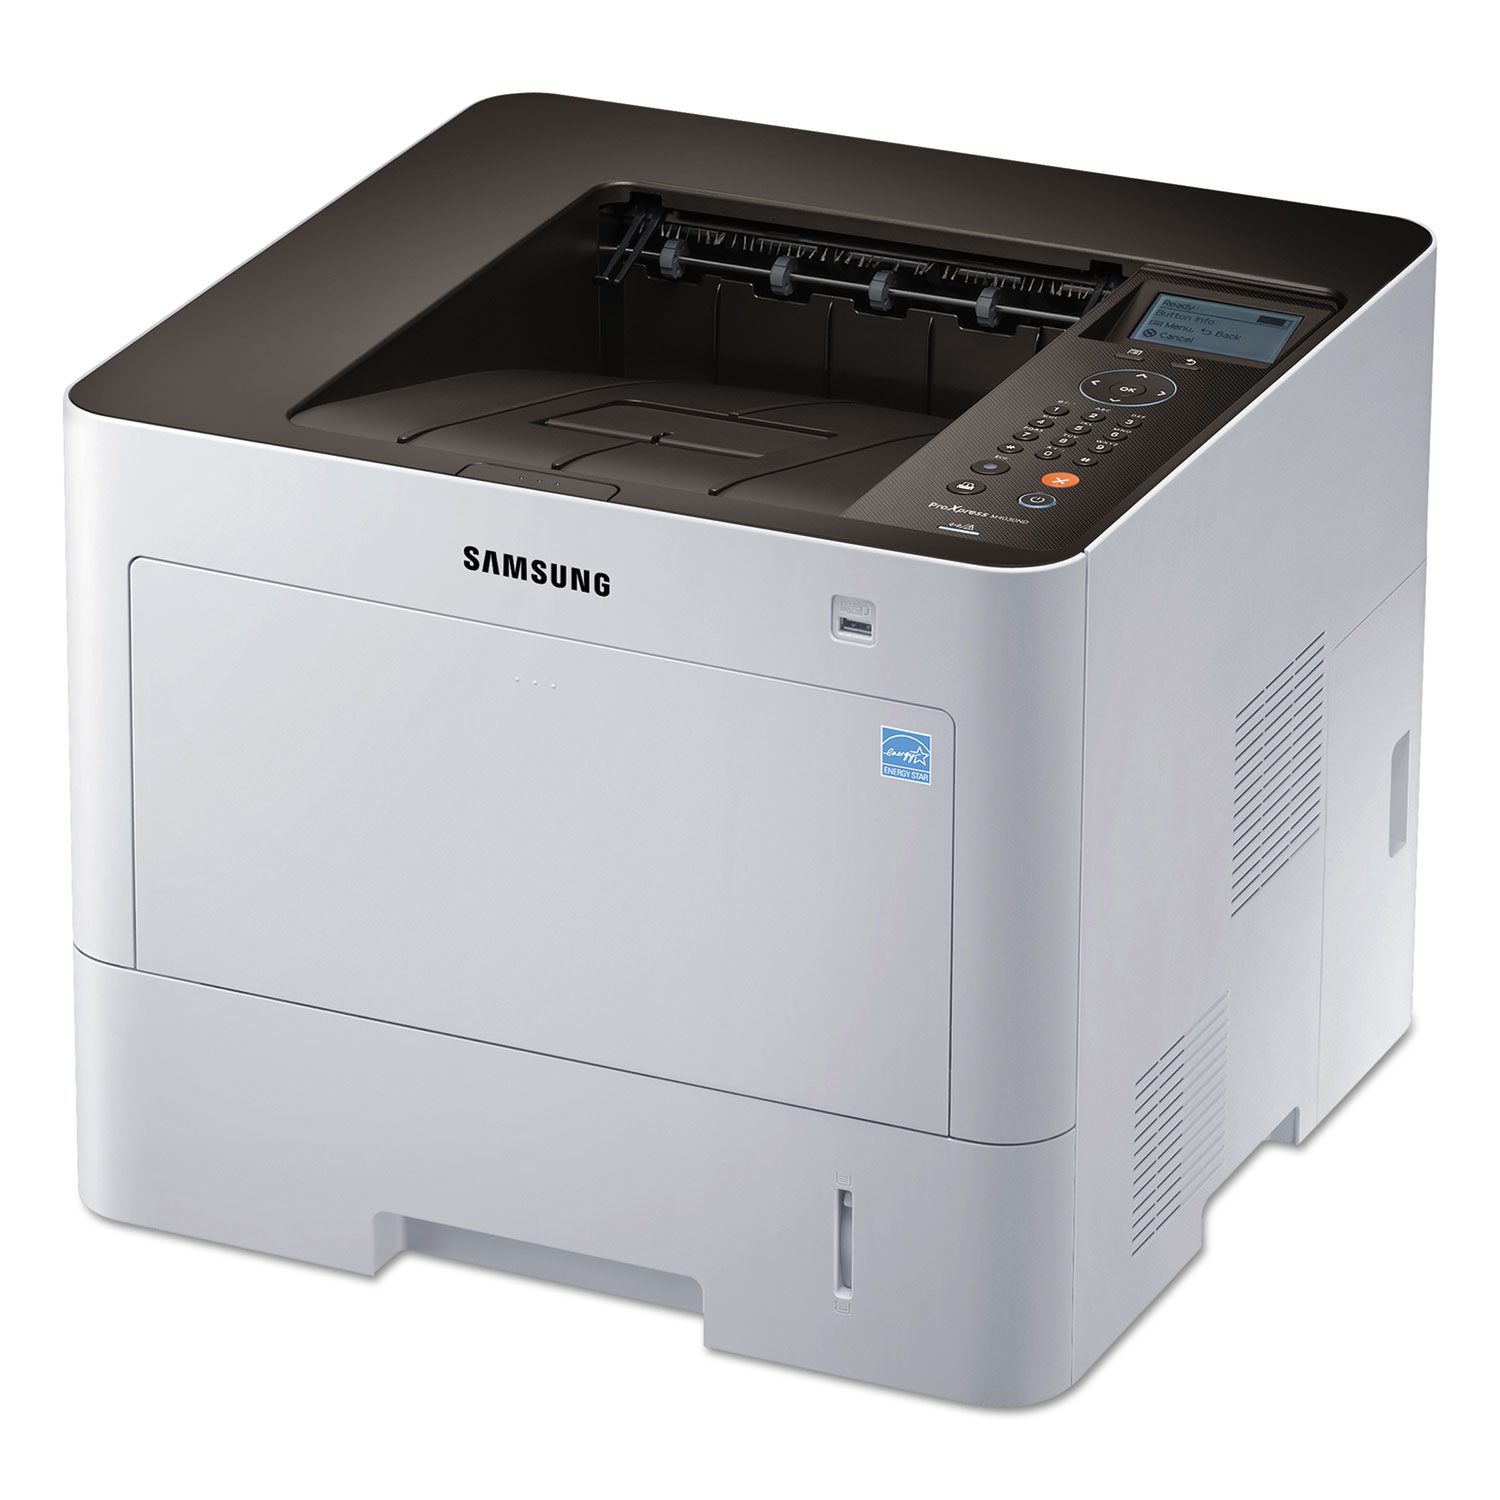 ProXpress M4070FX Multifunction Laser Printer, Copy/Fax/Print/Scan